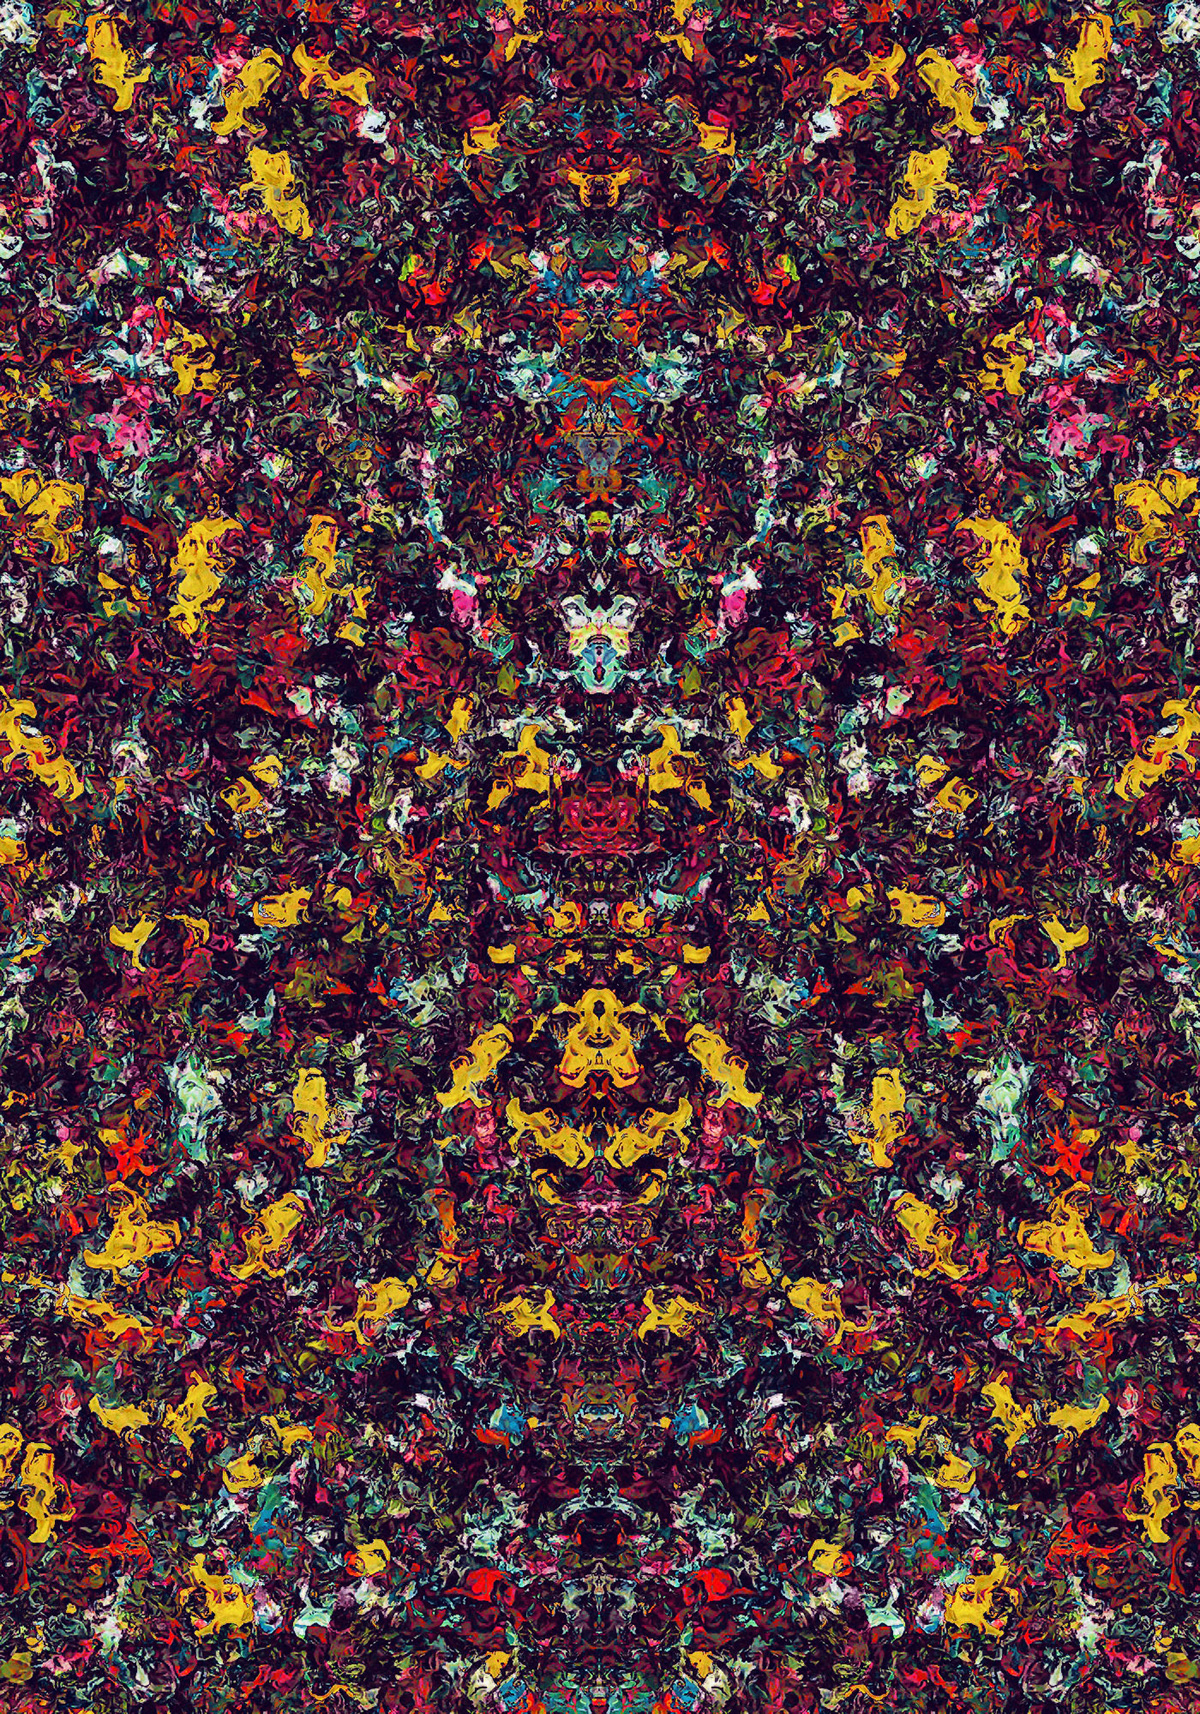 Pragyan Uprety abstract generative Digital Art  Abstract Art surreal pattern design  generative art